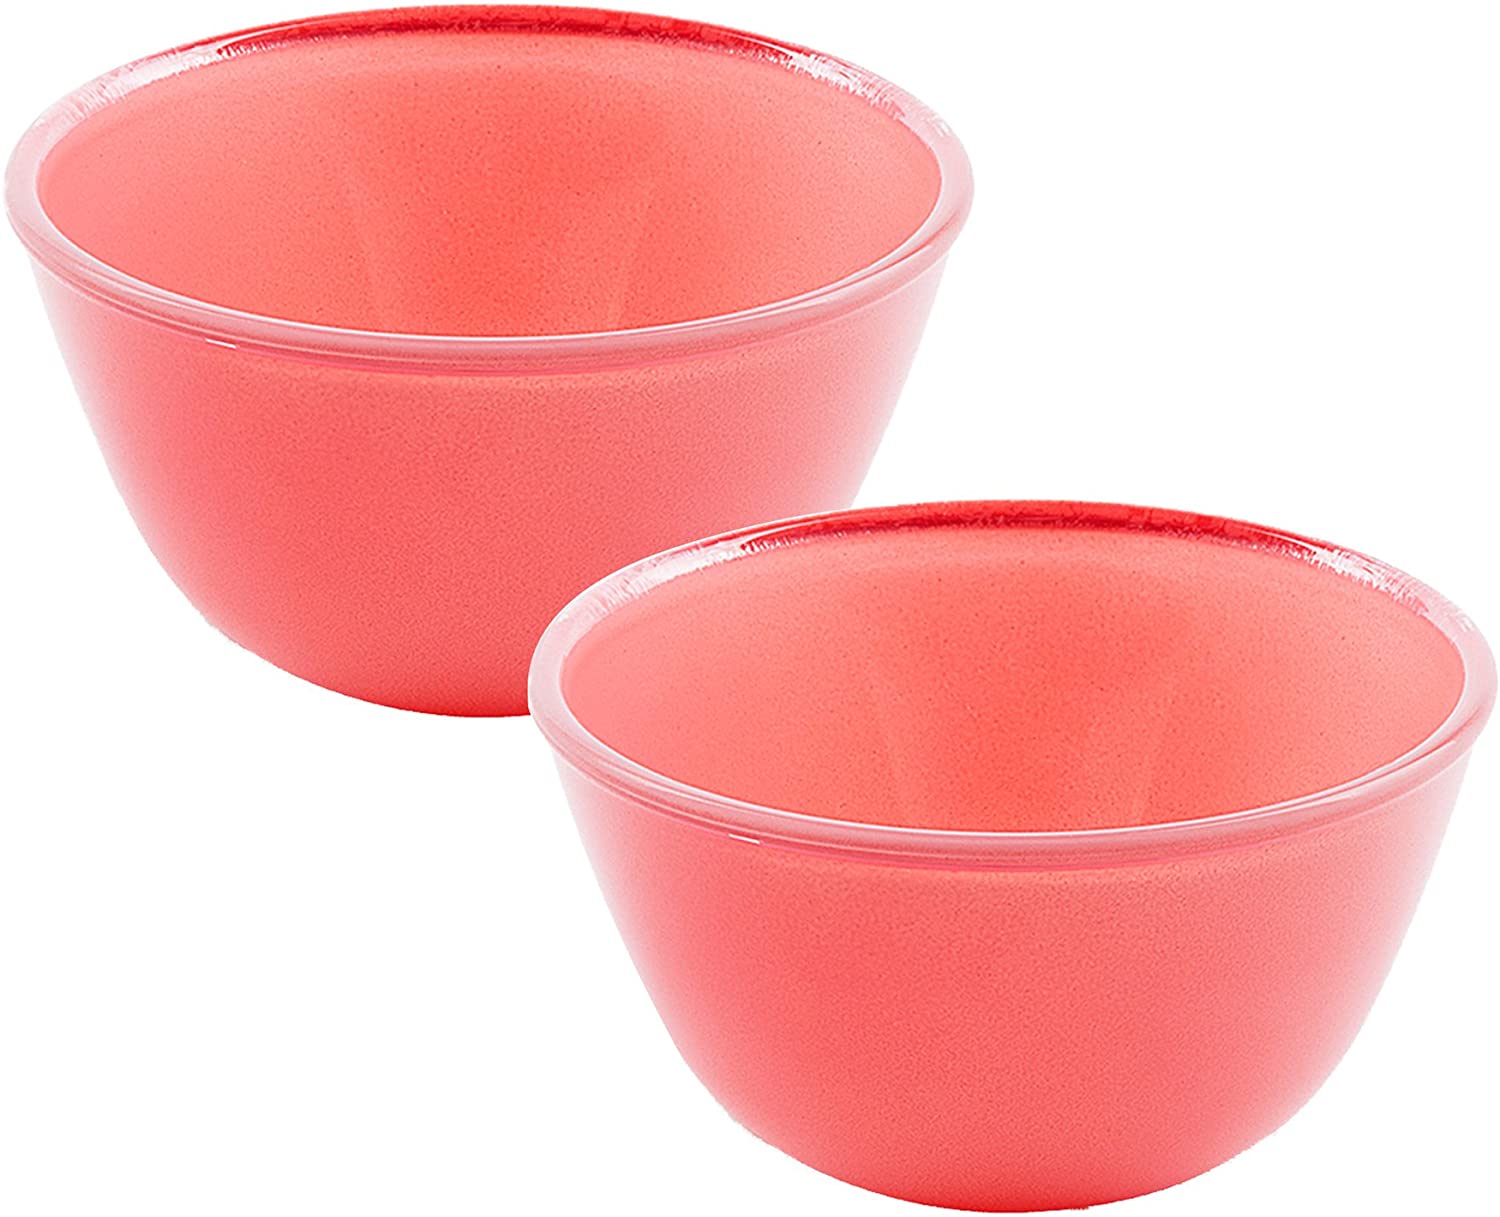 Bohemia Cristal Play of colors Cooking Set of 2 Bowls 0.5 Litre Borosilicate Glass Bowl, 8 x 15 x 8 cm